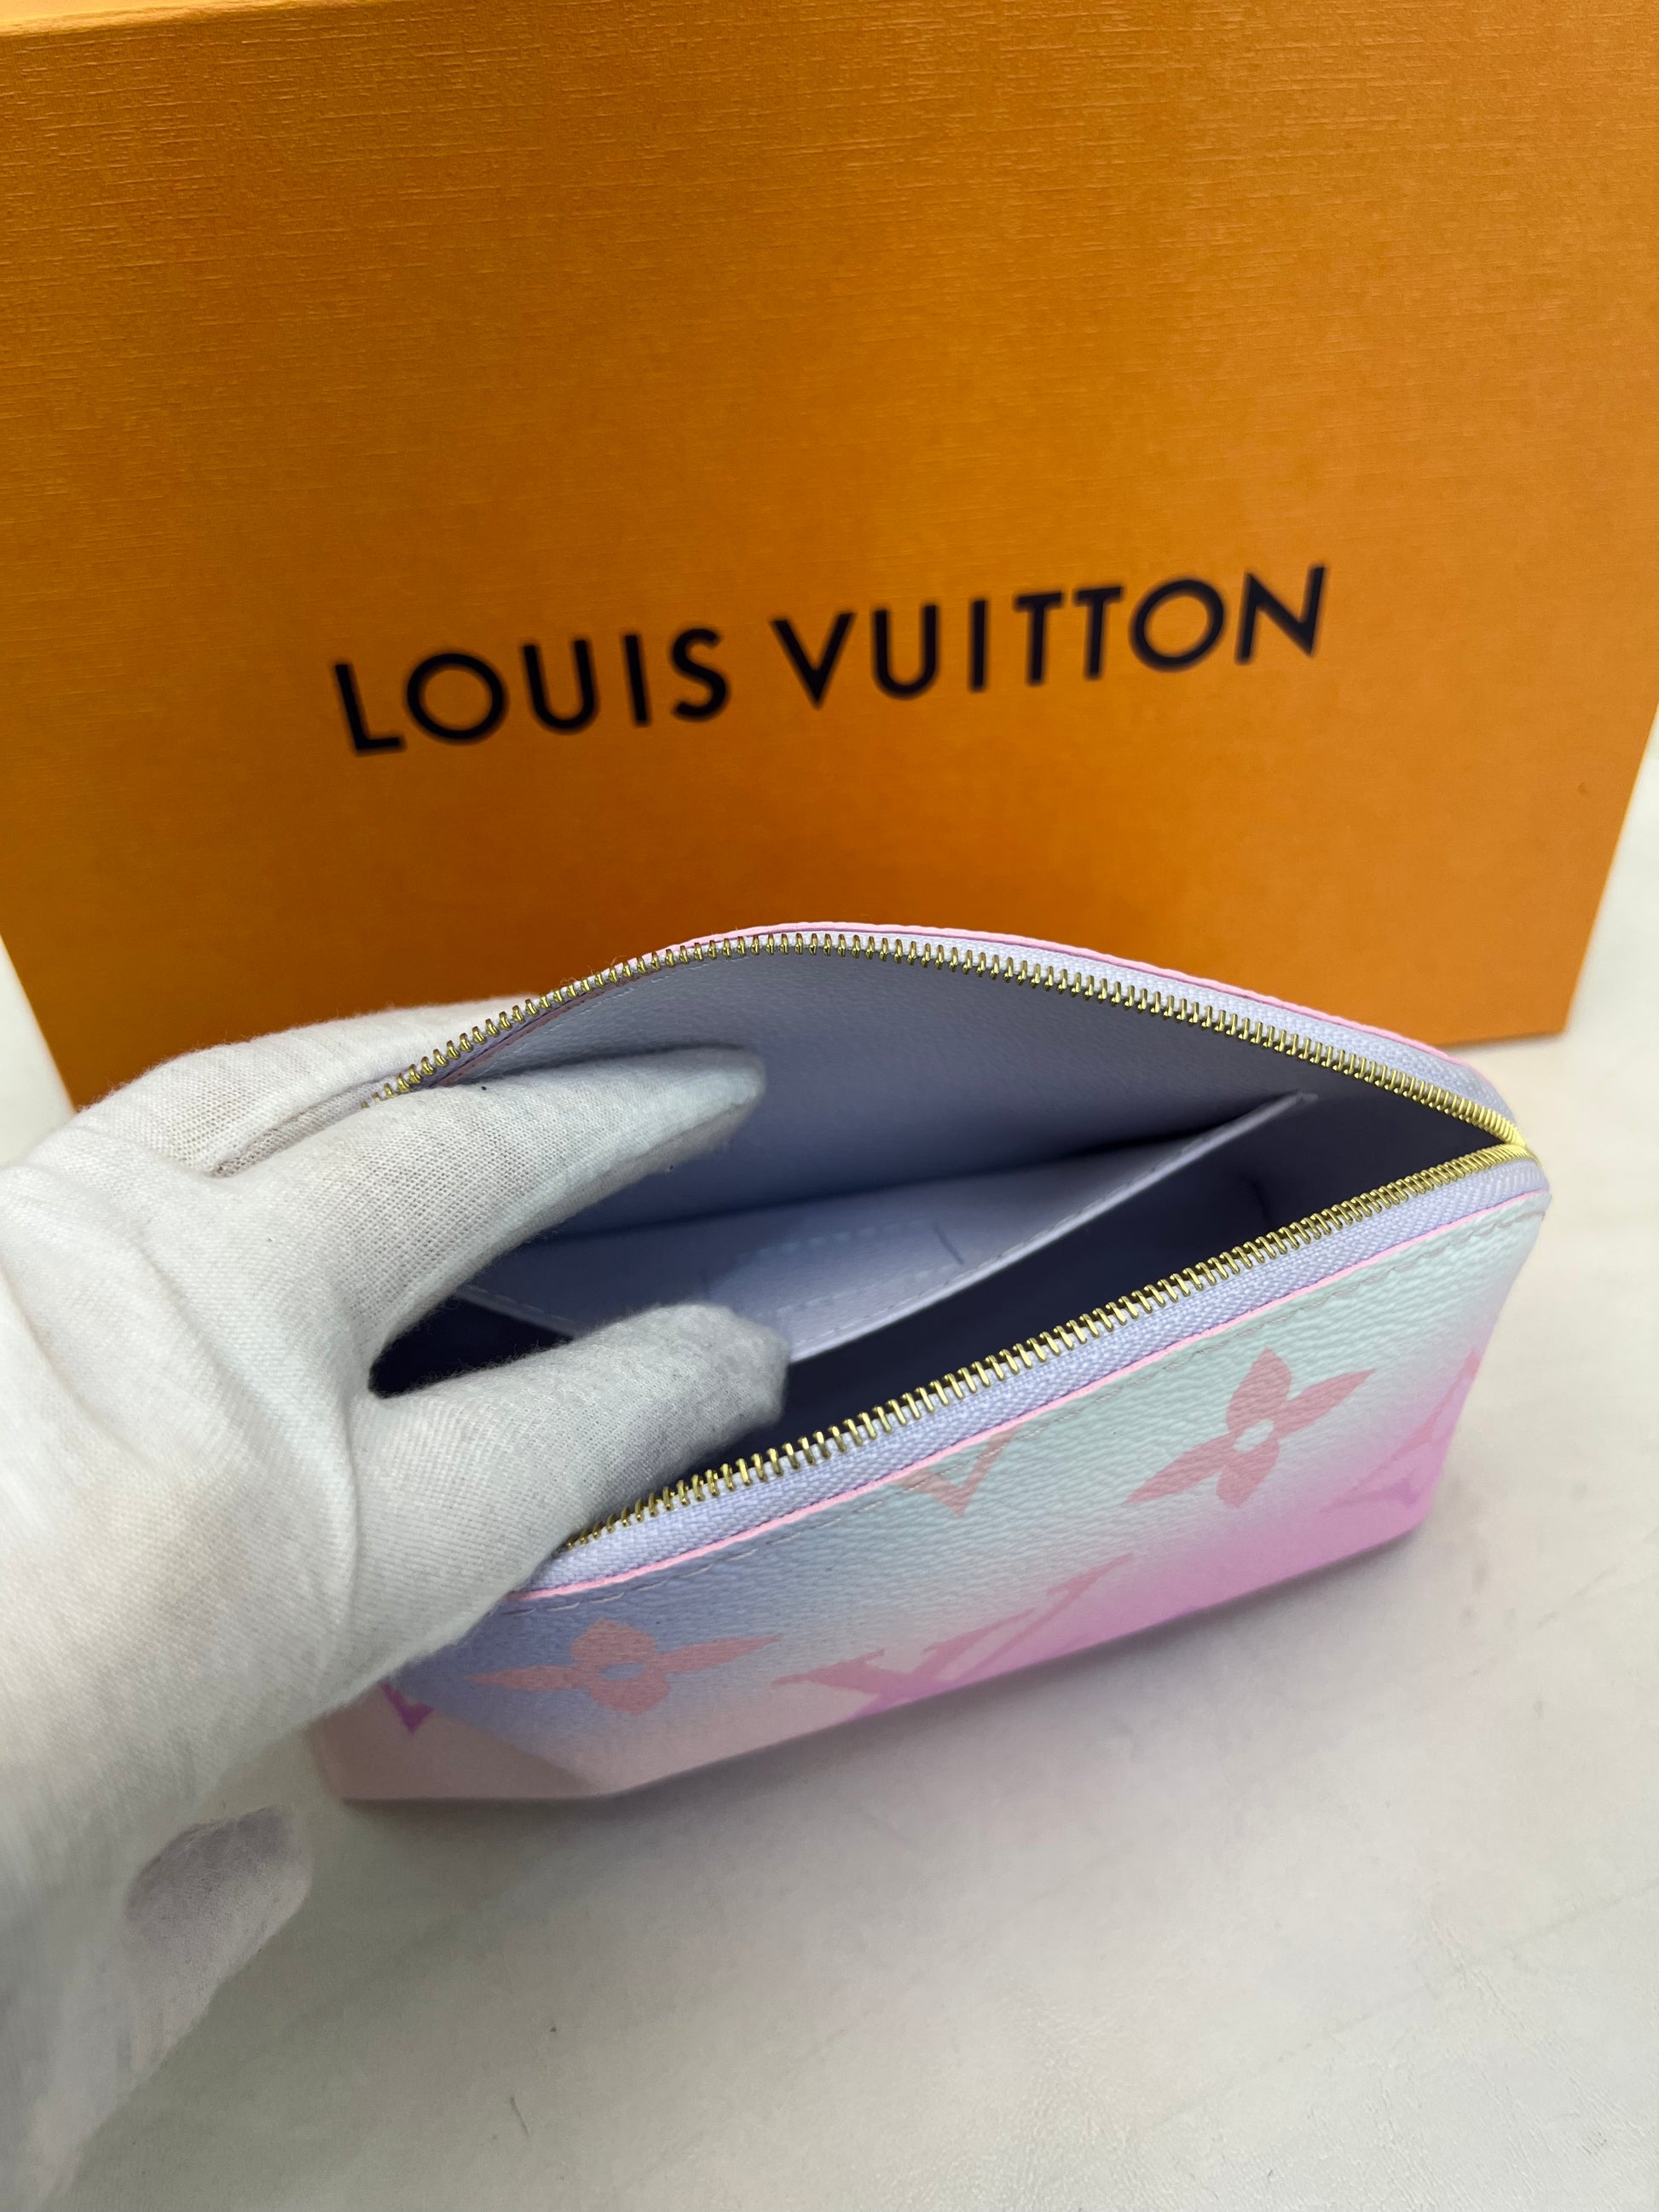 New Louis Vuitton Monogram Toiletry Clutch in Box